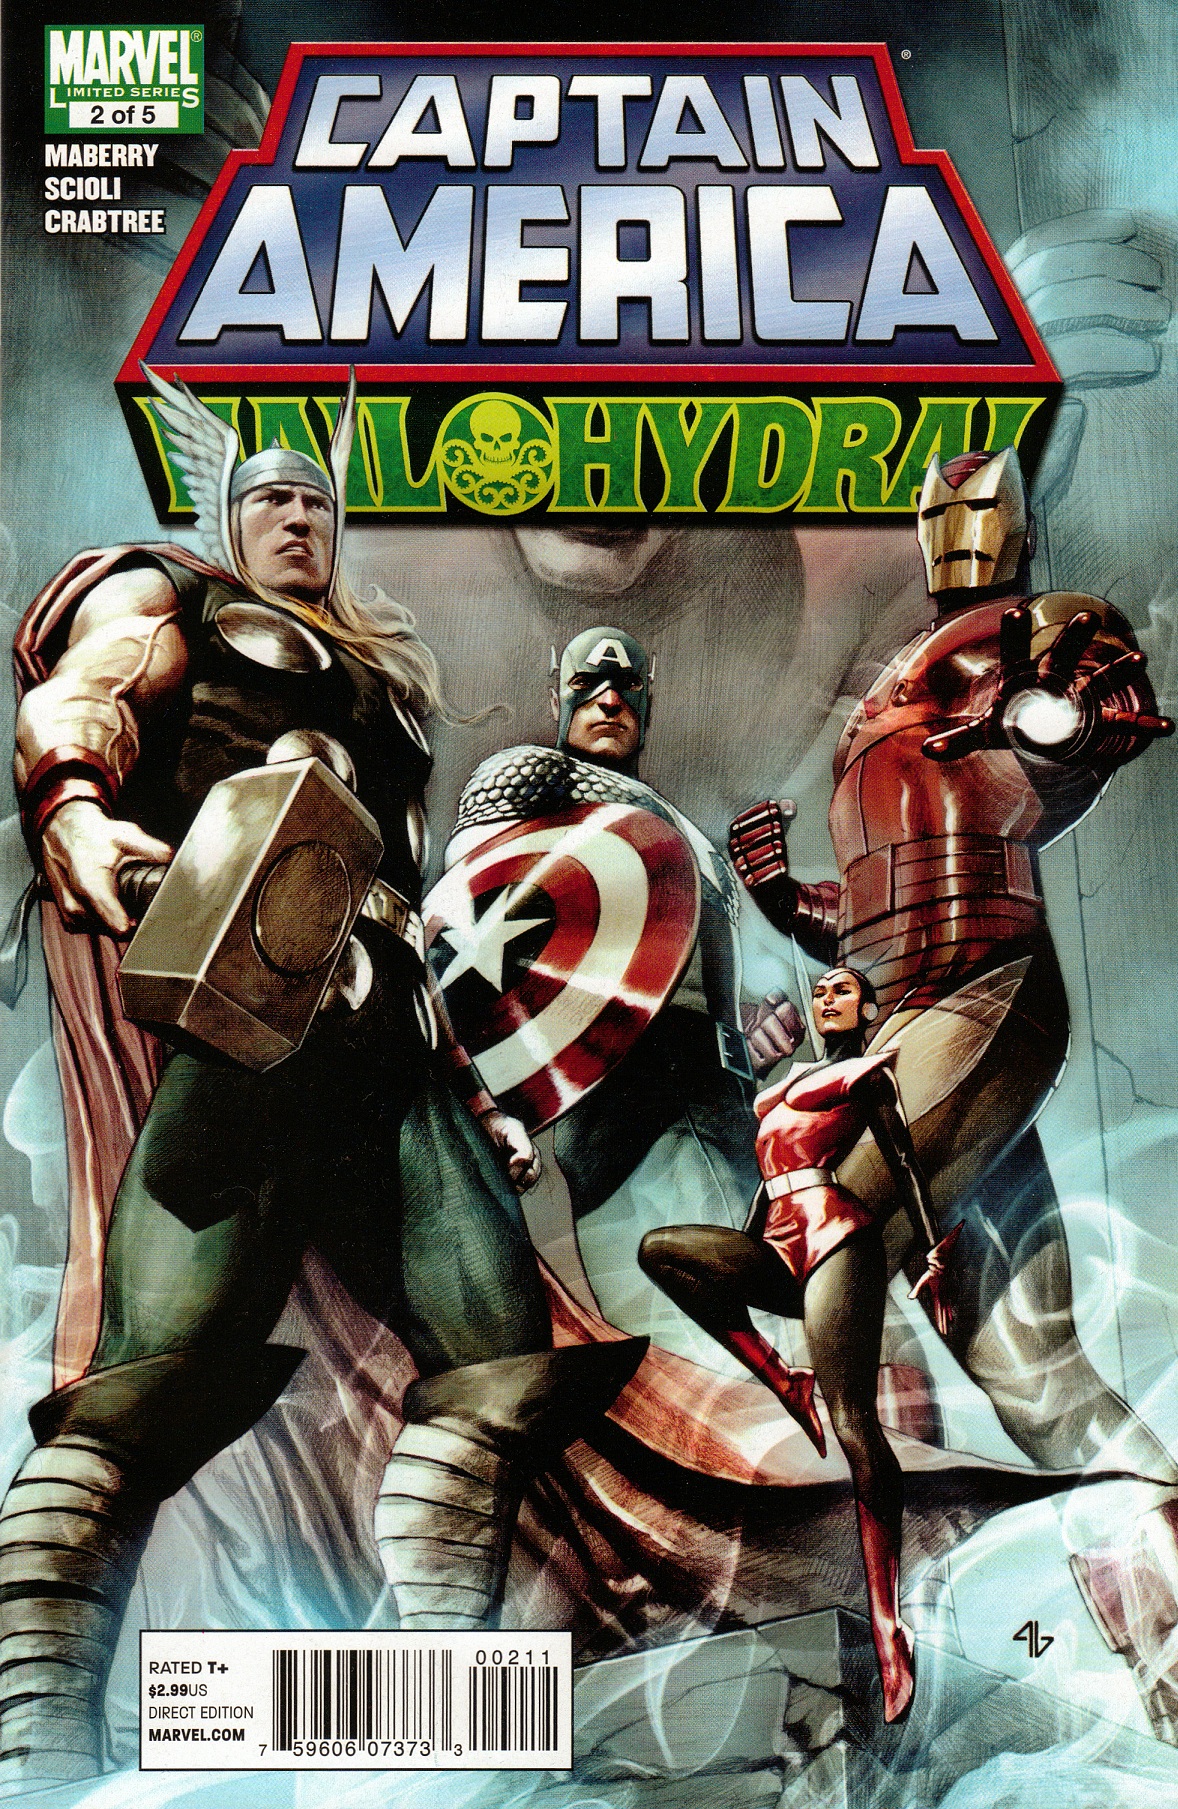 Captain America: Hail Hydra Vol 1 2 | Marvel Database | FANDOM powered by Wikia1178 x 1809